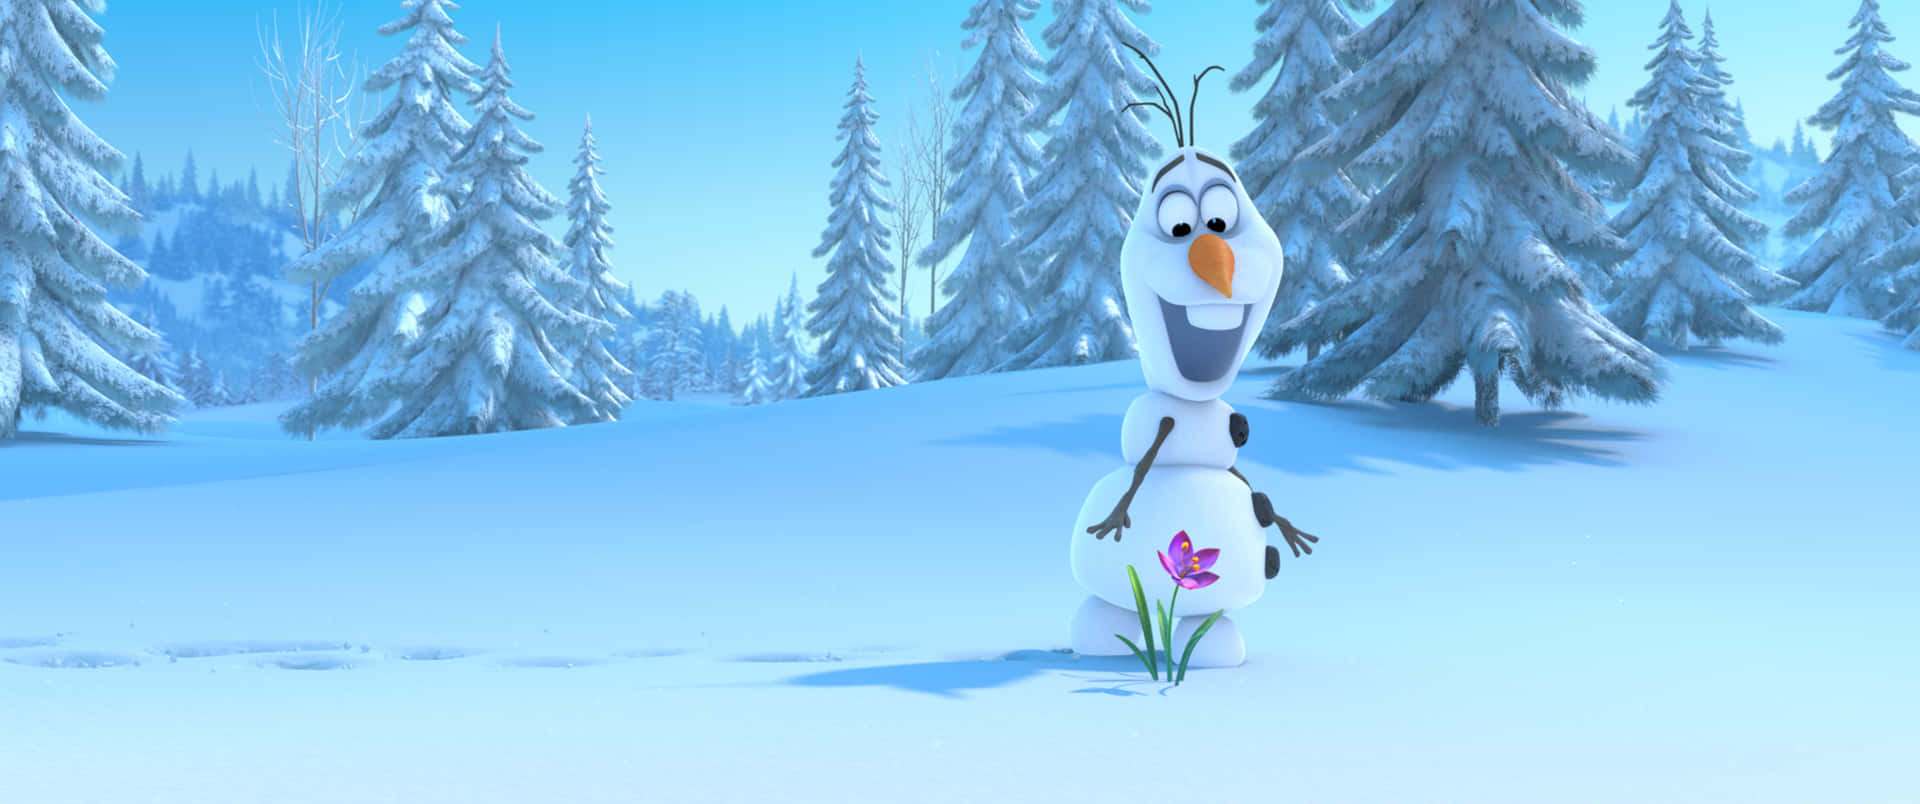 Caption: Enchanting Winter Landscape In Disney's Frozen